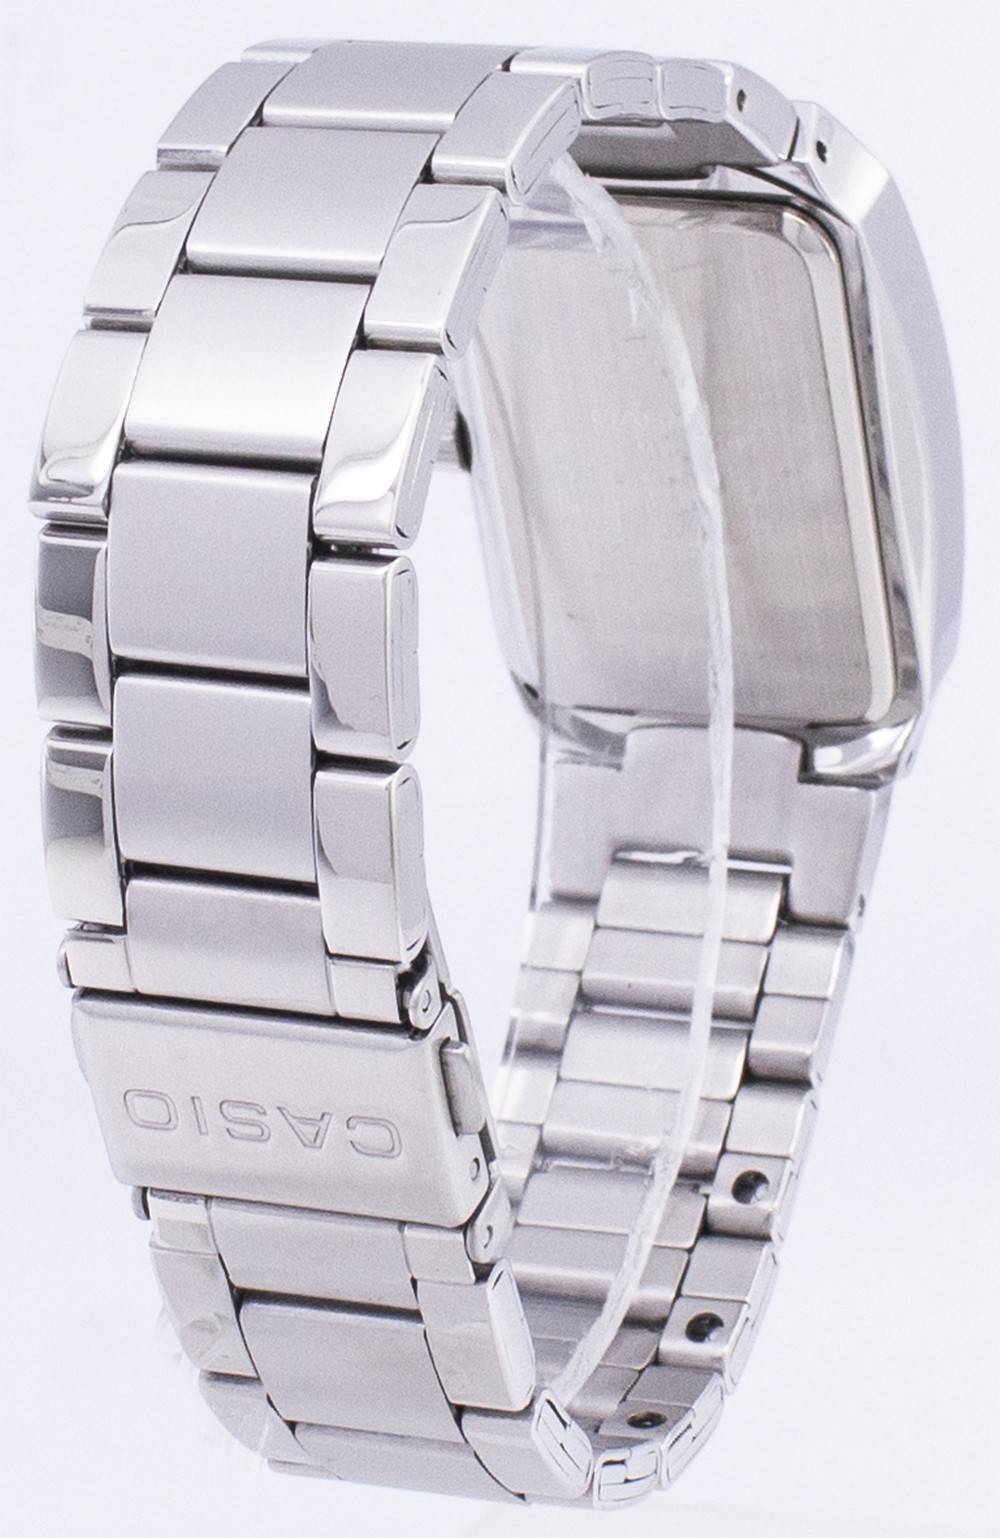 Casio Men's Quartz Watch Quartz Mineral Crystal MTP-1165A-1C - image 3 of 3